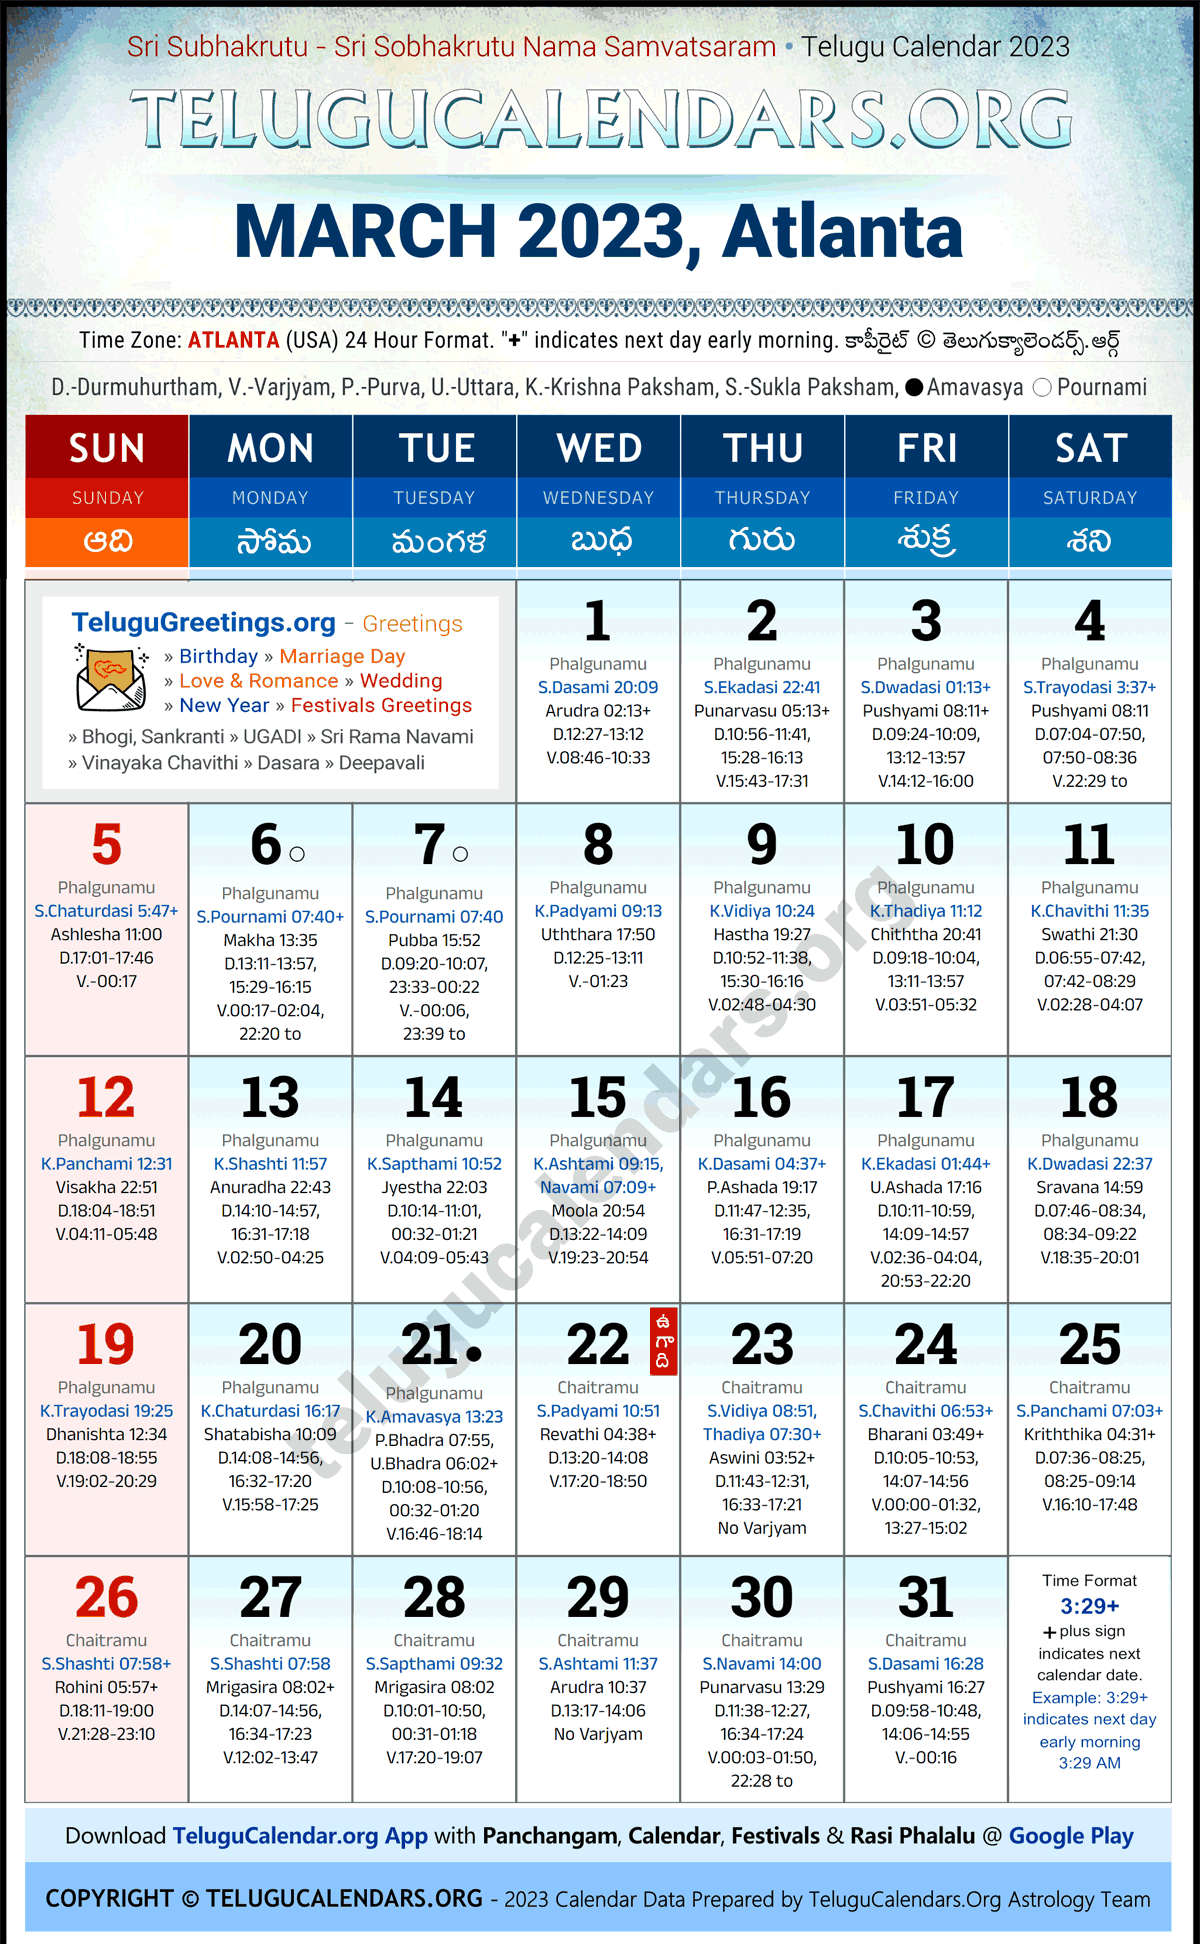 Telugu Calendar 2023 March Festivals for Atlanta